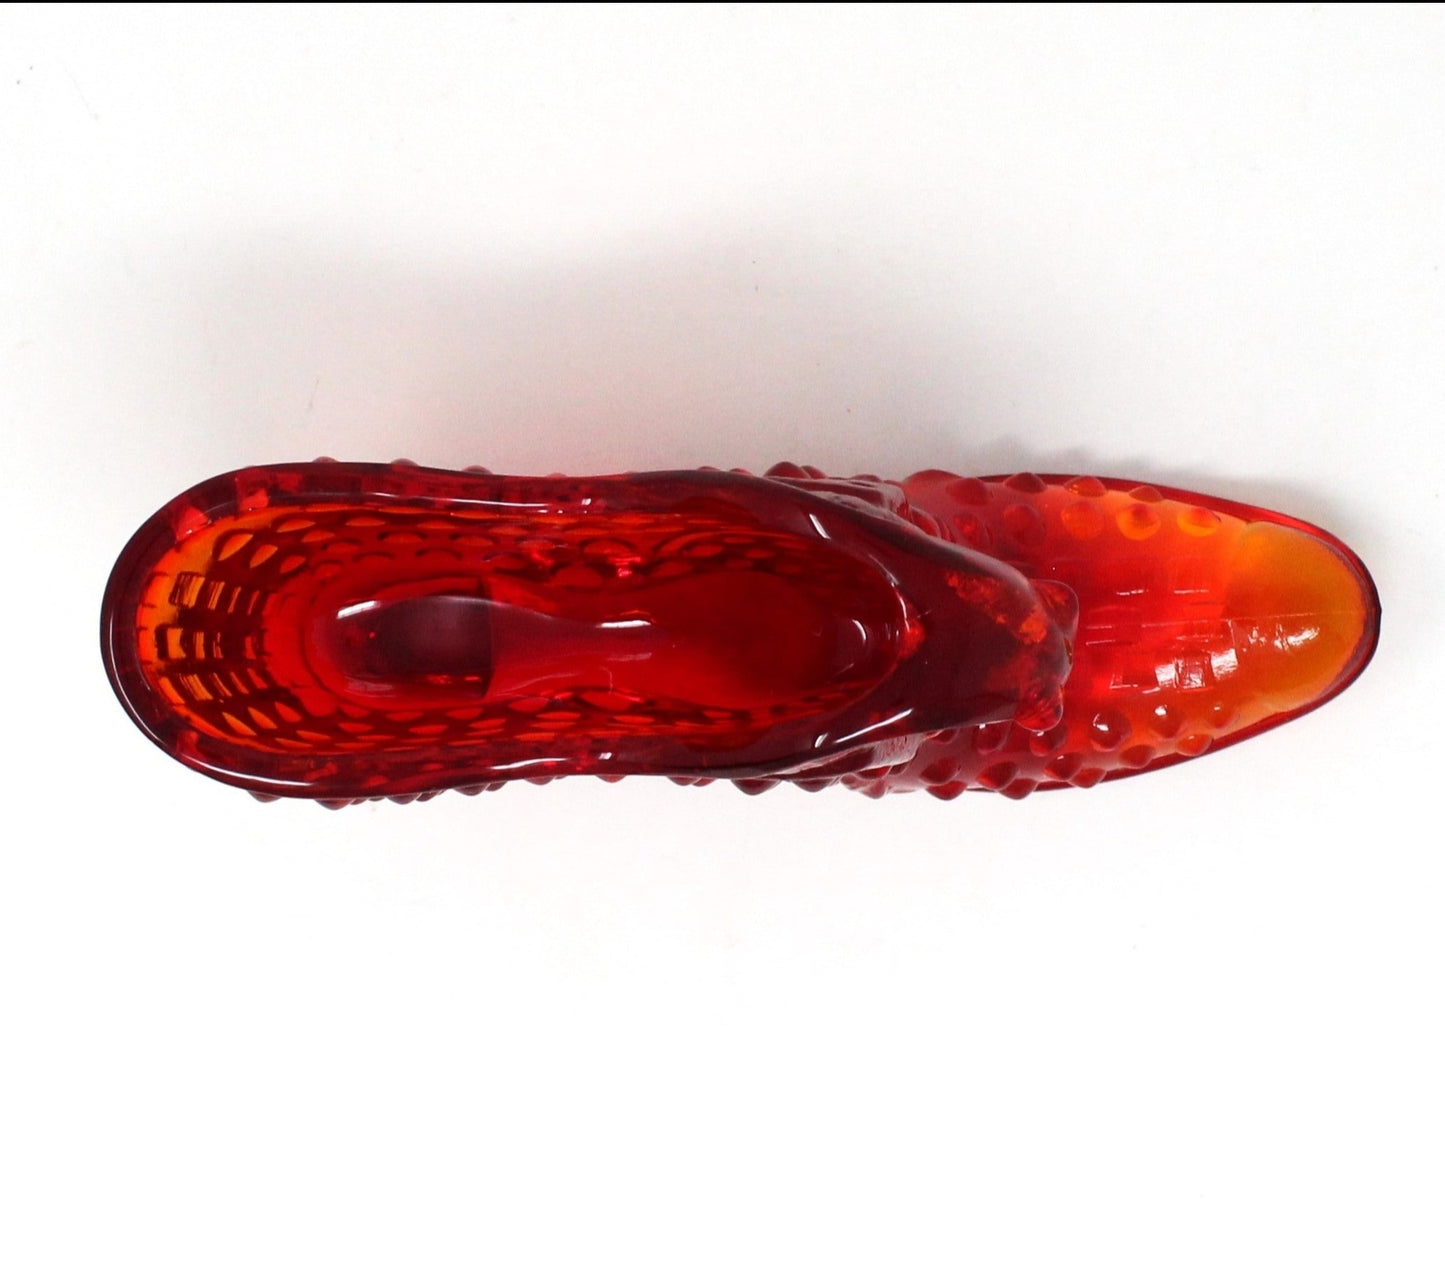 Shoe, Fenton Slipper, Hobnail Orange / Amberina Glass, Vintage